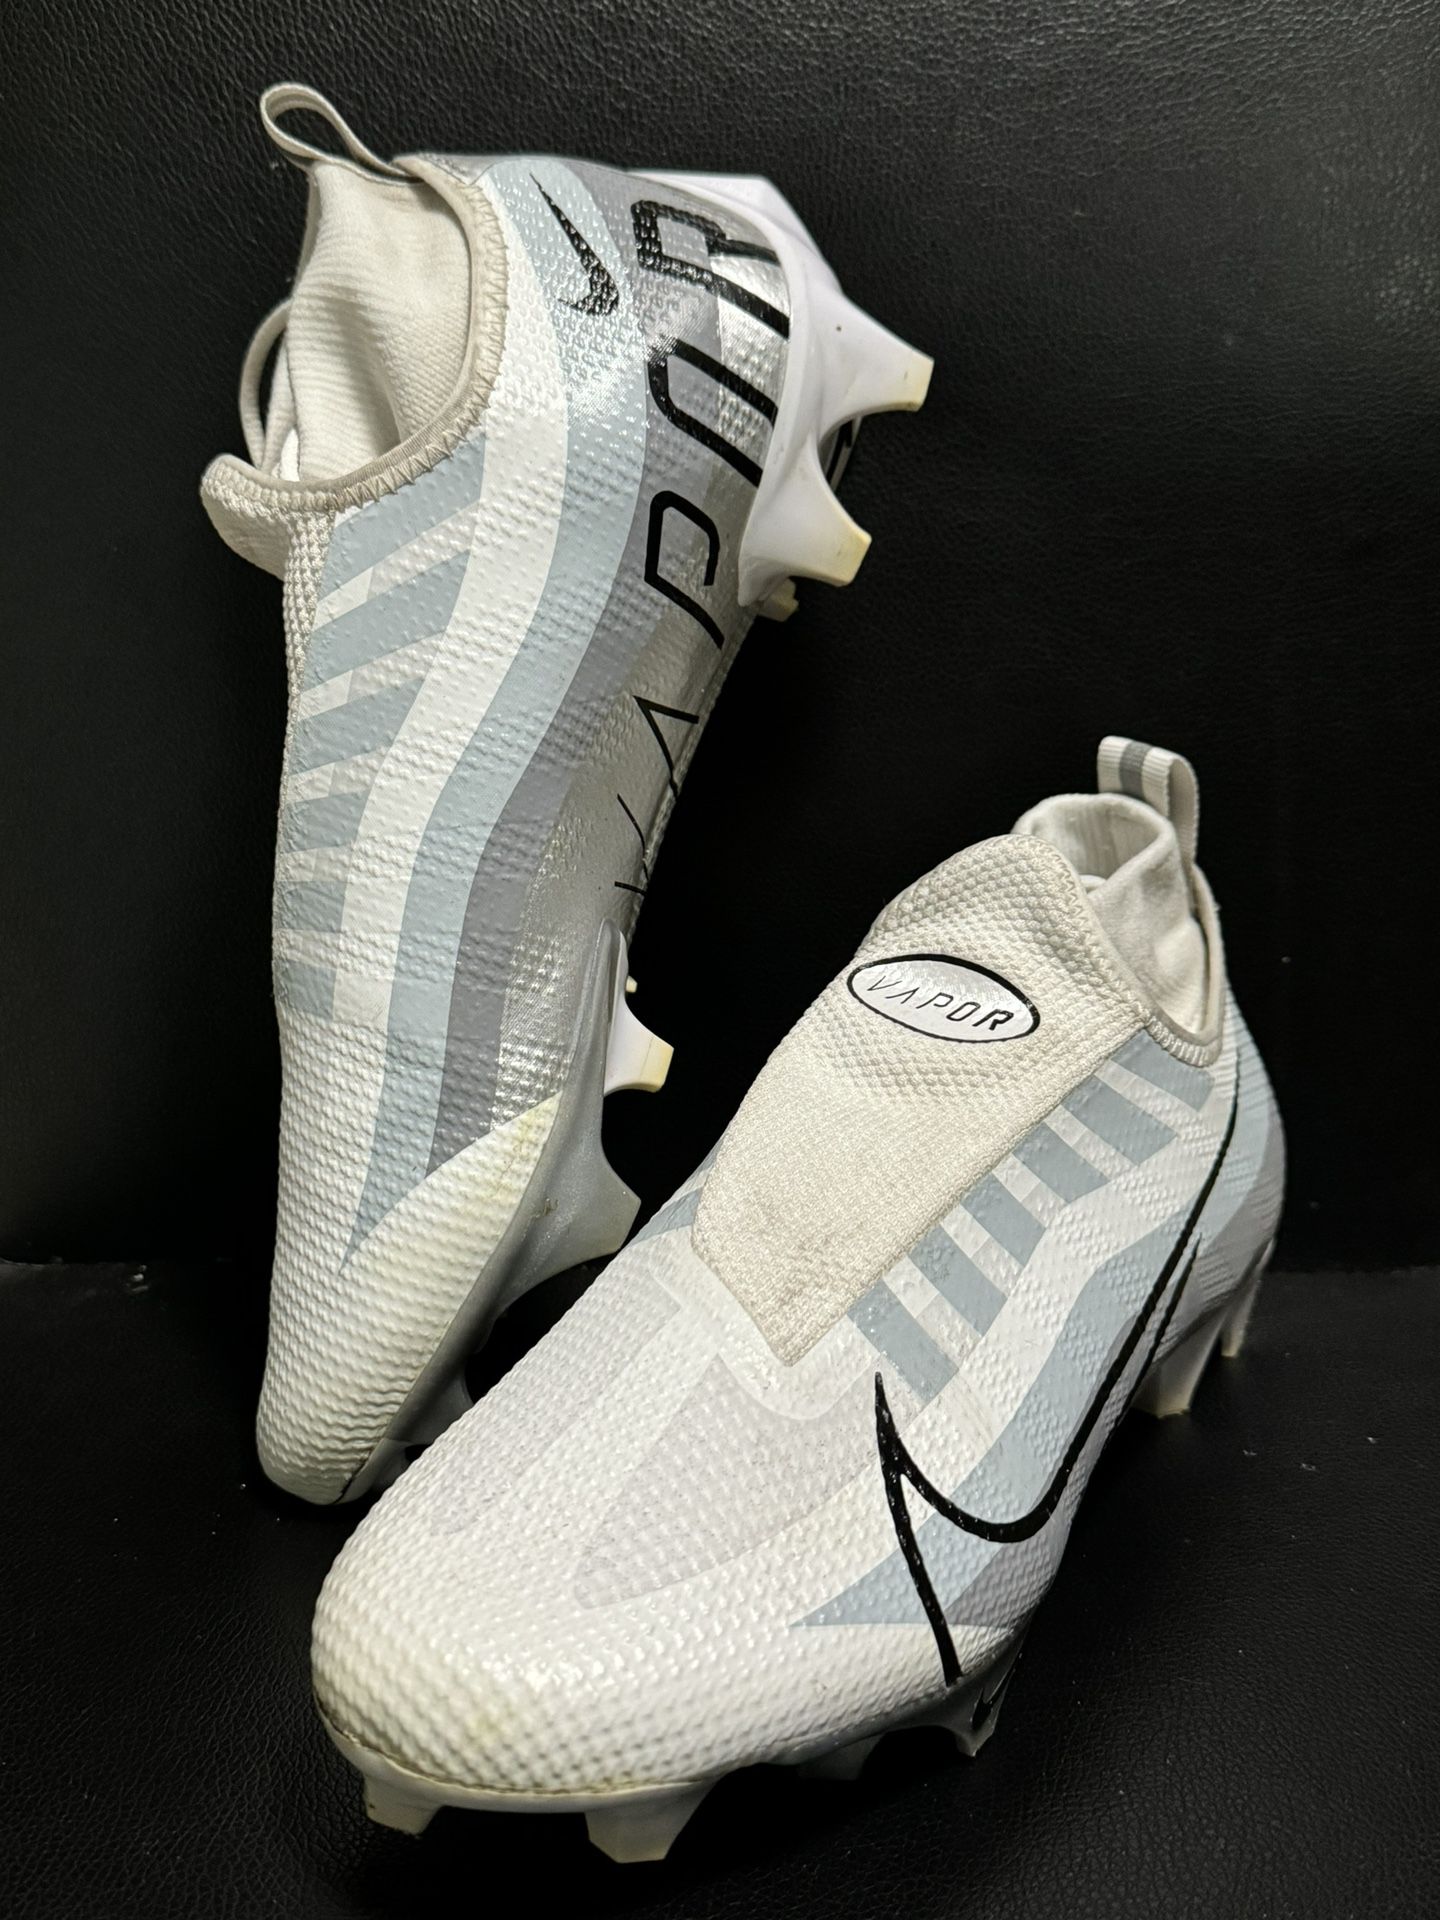 Nike Vapor Edge Pro 360 Football Cleats White Metallic Silver Men’s size 8 GU